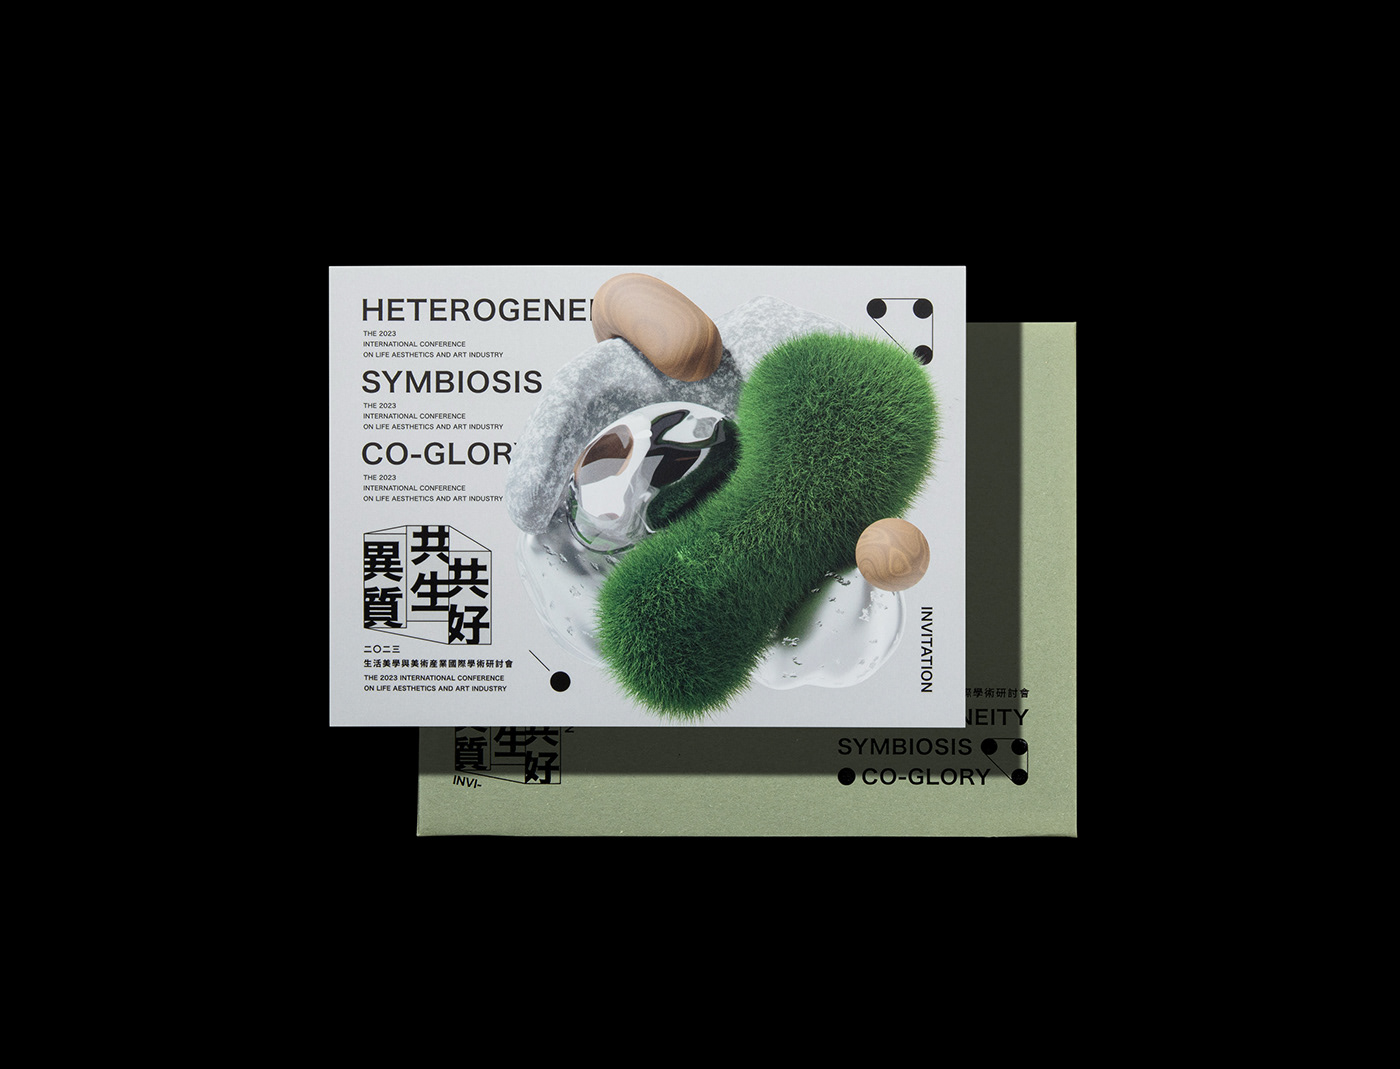 conference Event key visual design poster seminar Taitung symbiosis co-glory Heterogeneity